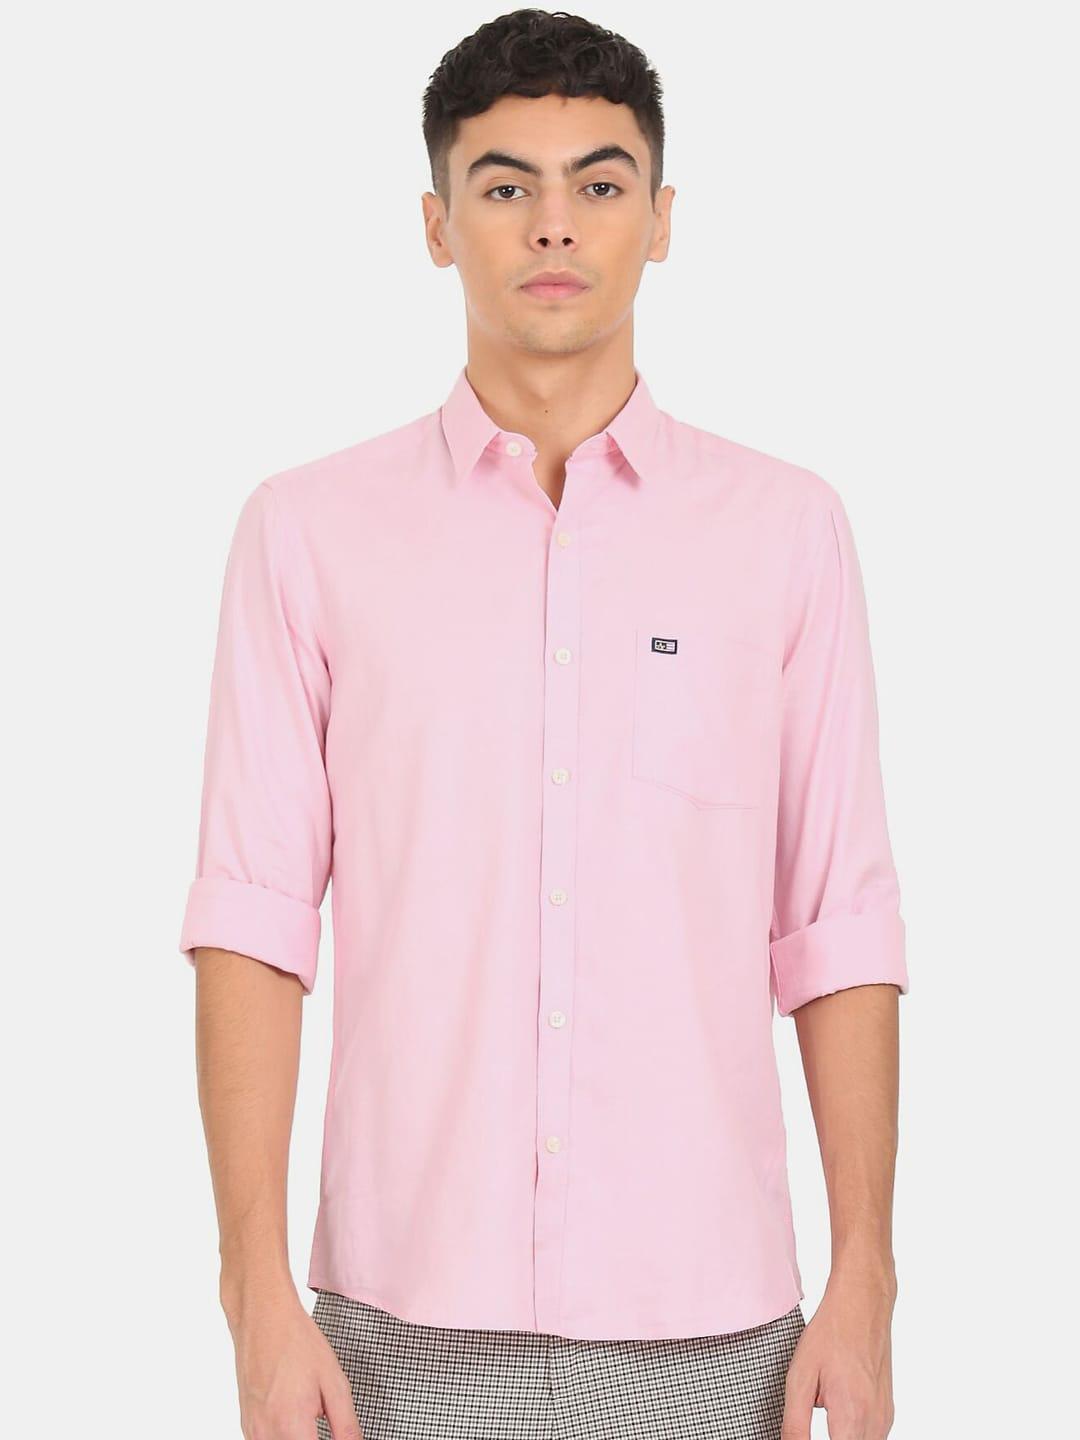 arrow-sport-men-pink-solid-casual-shirt